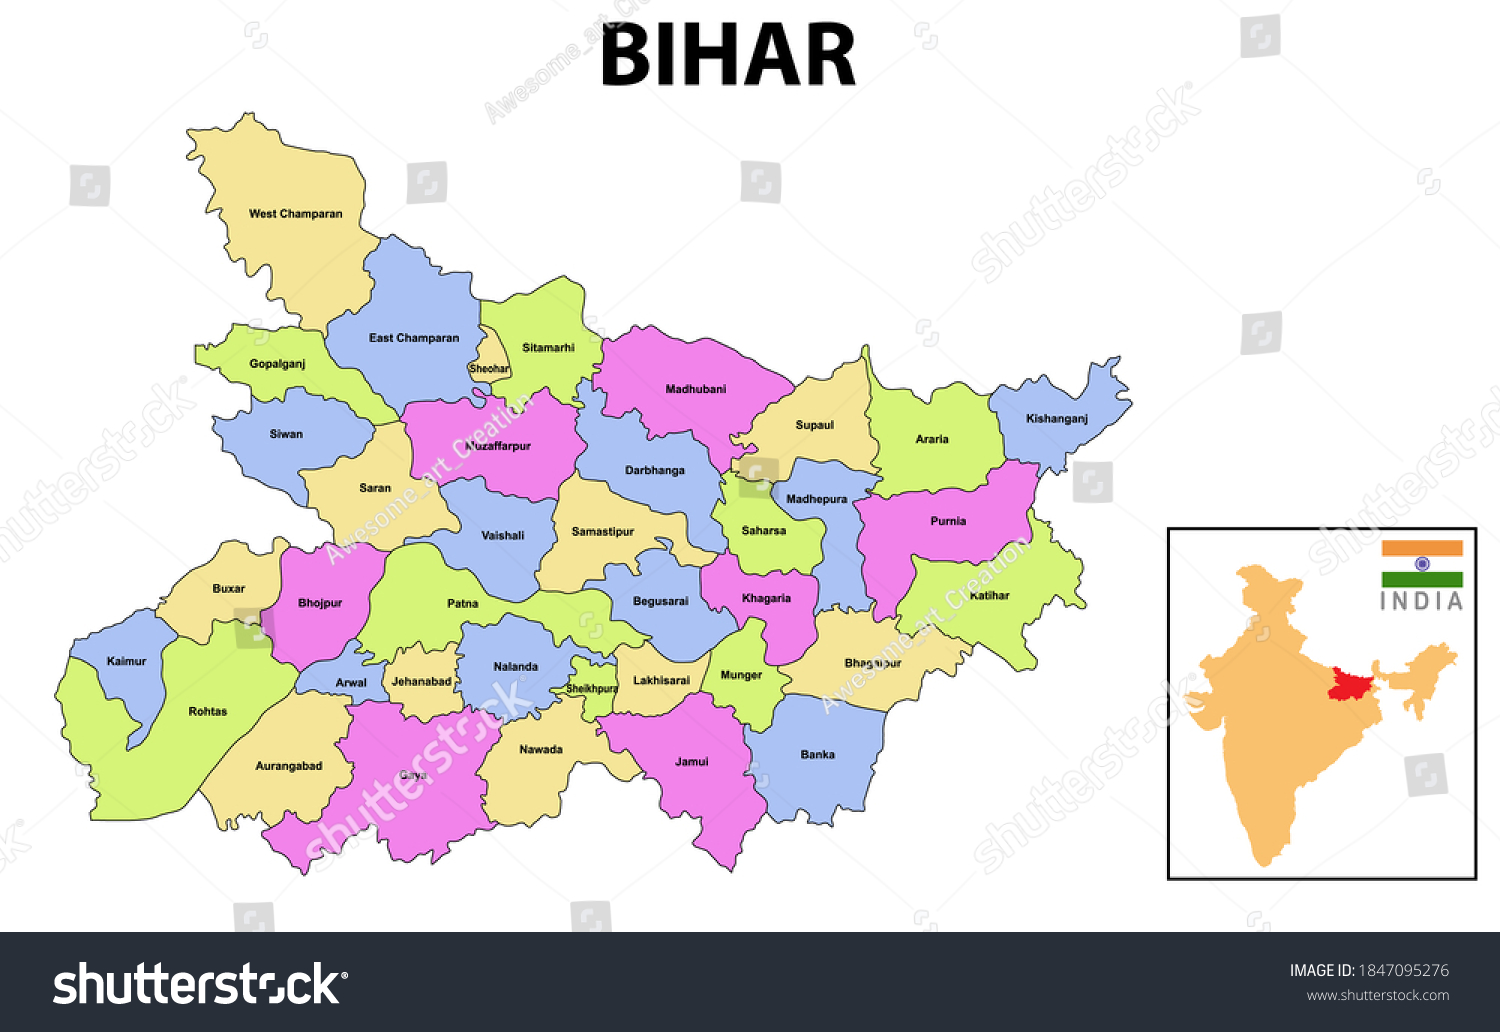 Political Map Of Bihar State Bihar Map Images, Stock Photos & Vectors | Shutterstock